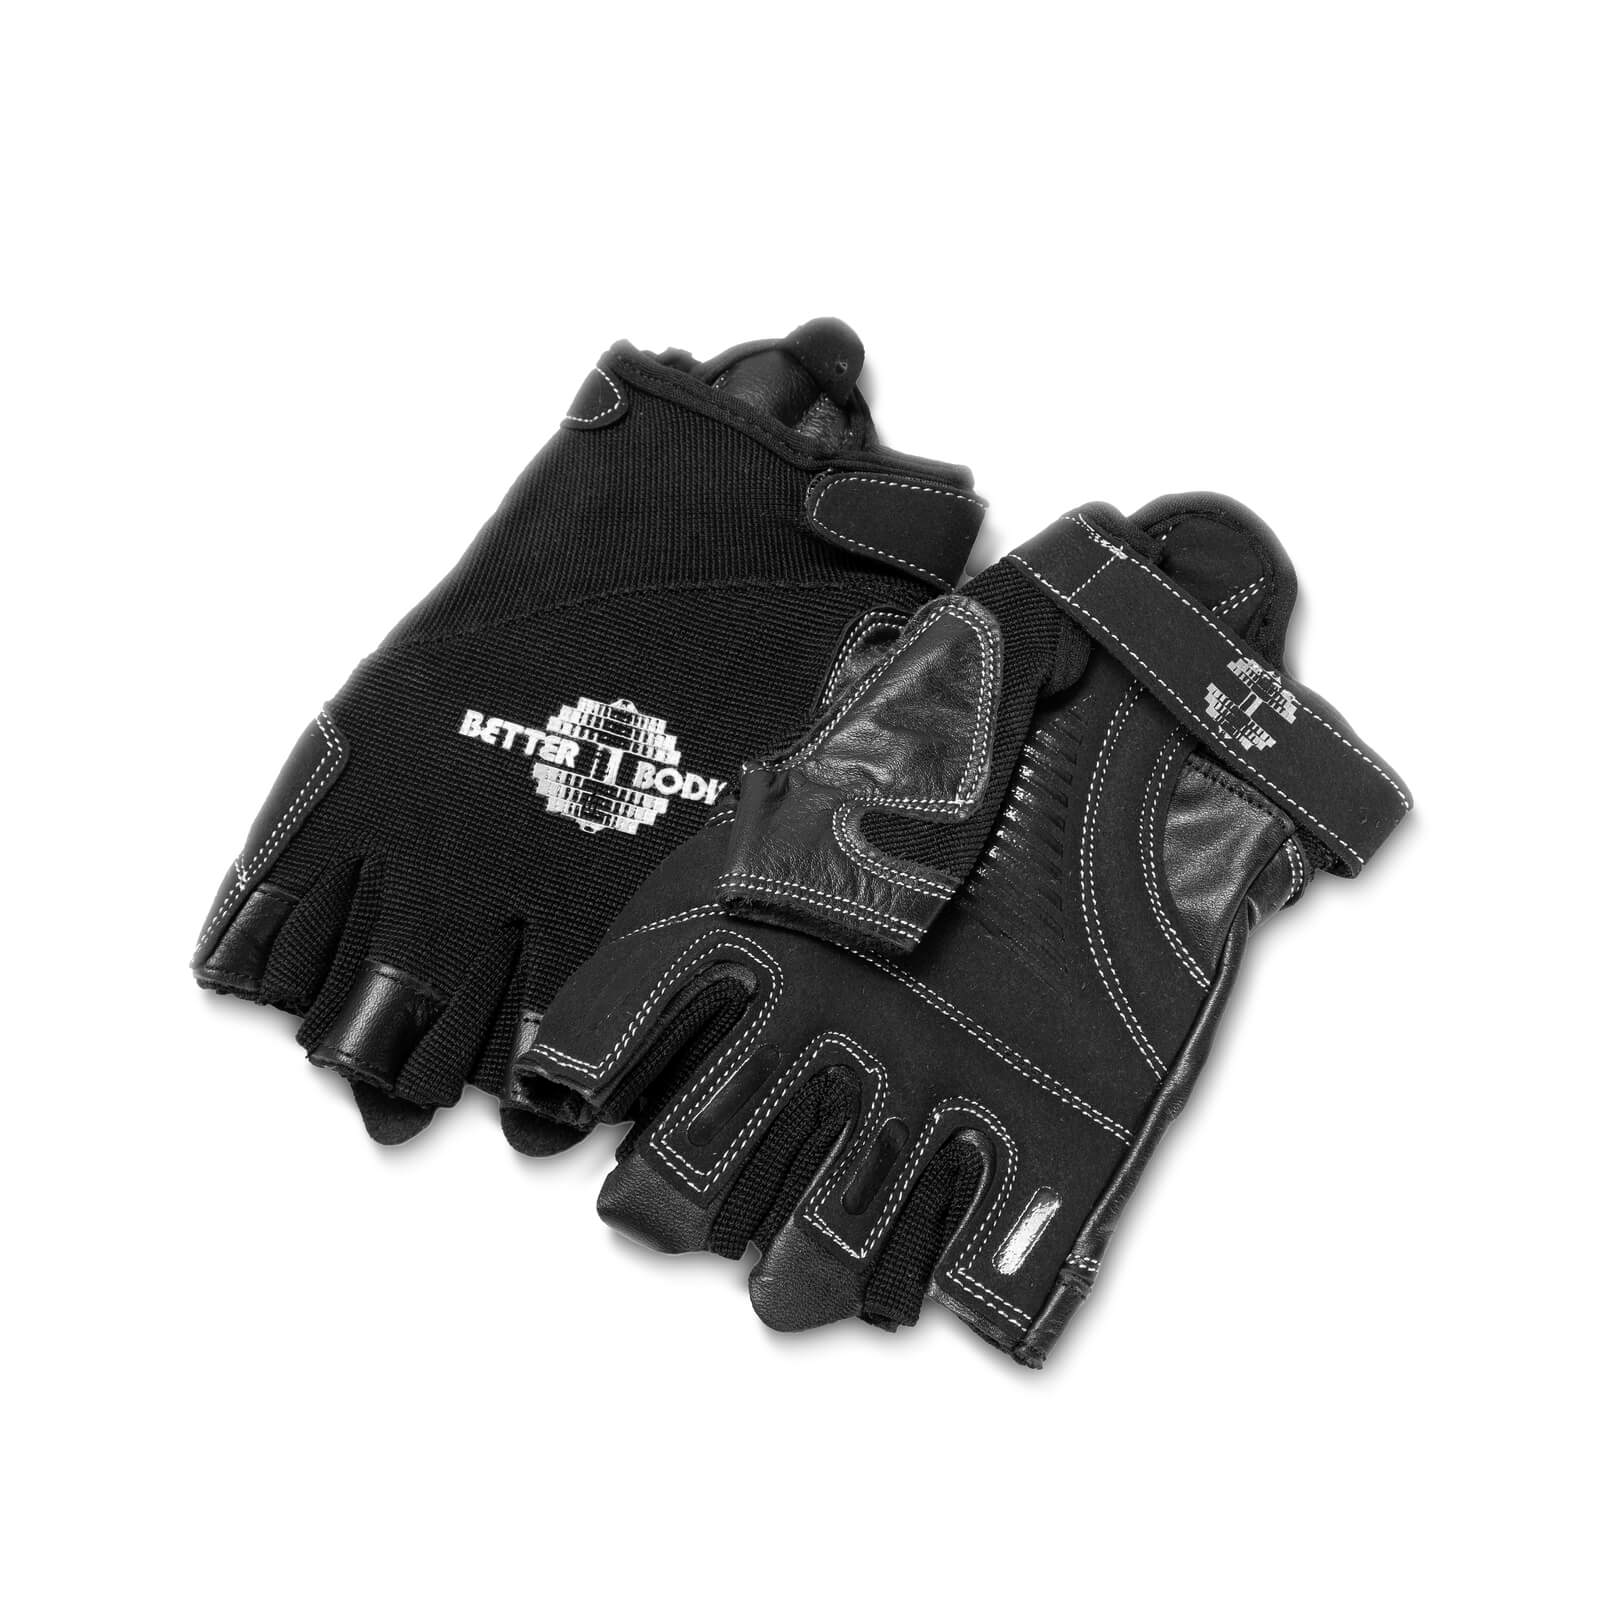 Pro Gym Gloves, black/black, Better Bodies